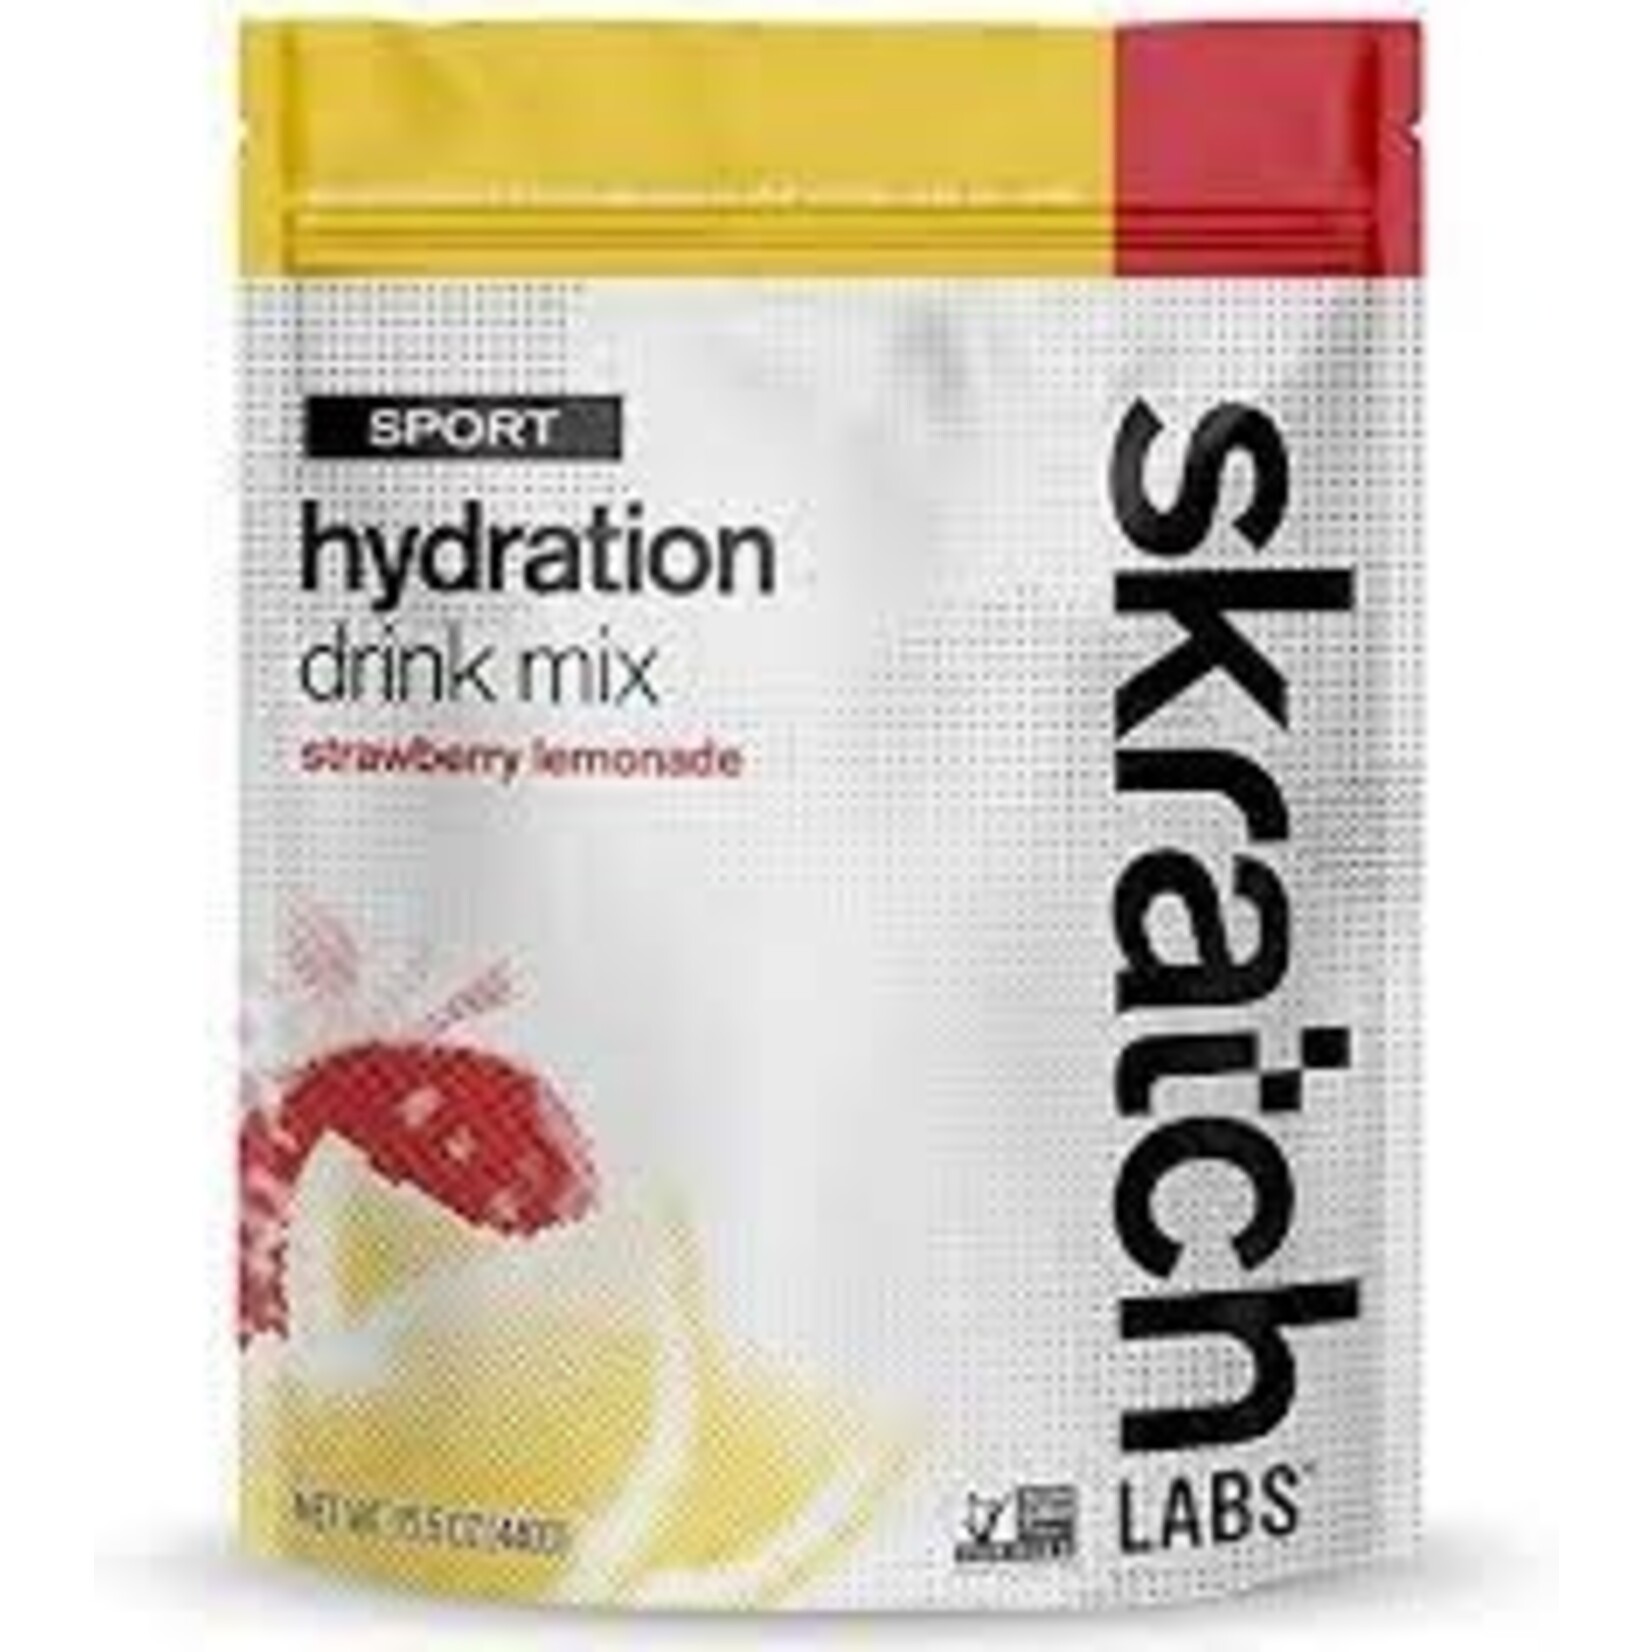 Skratch hydration mix strawberry lemonade